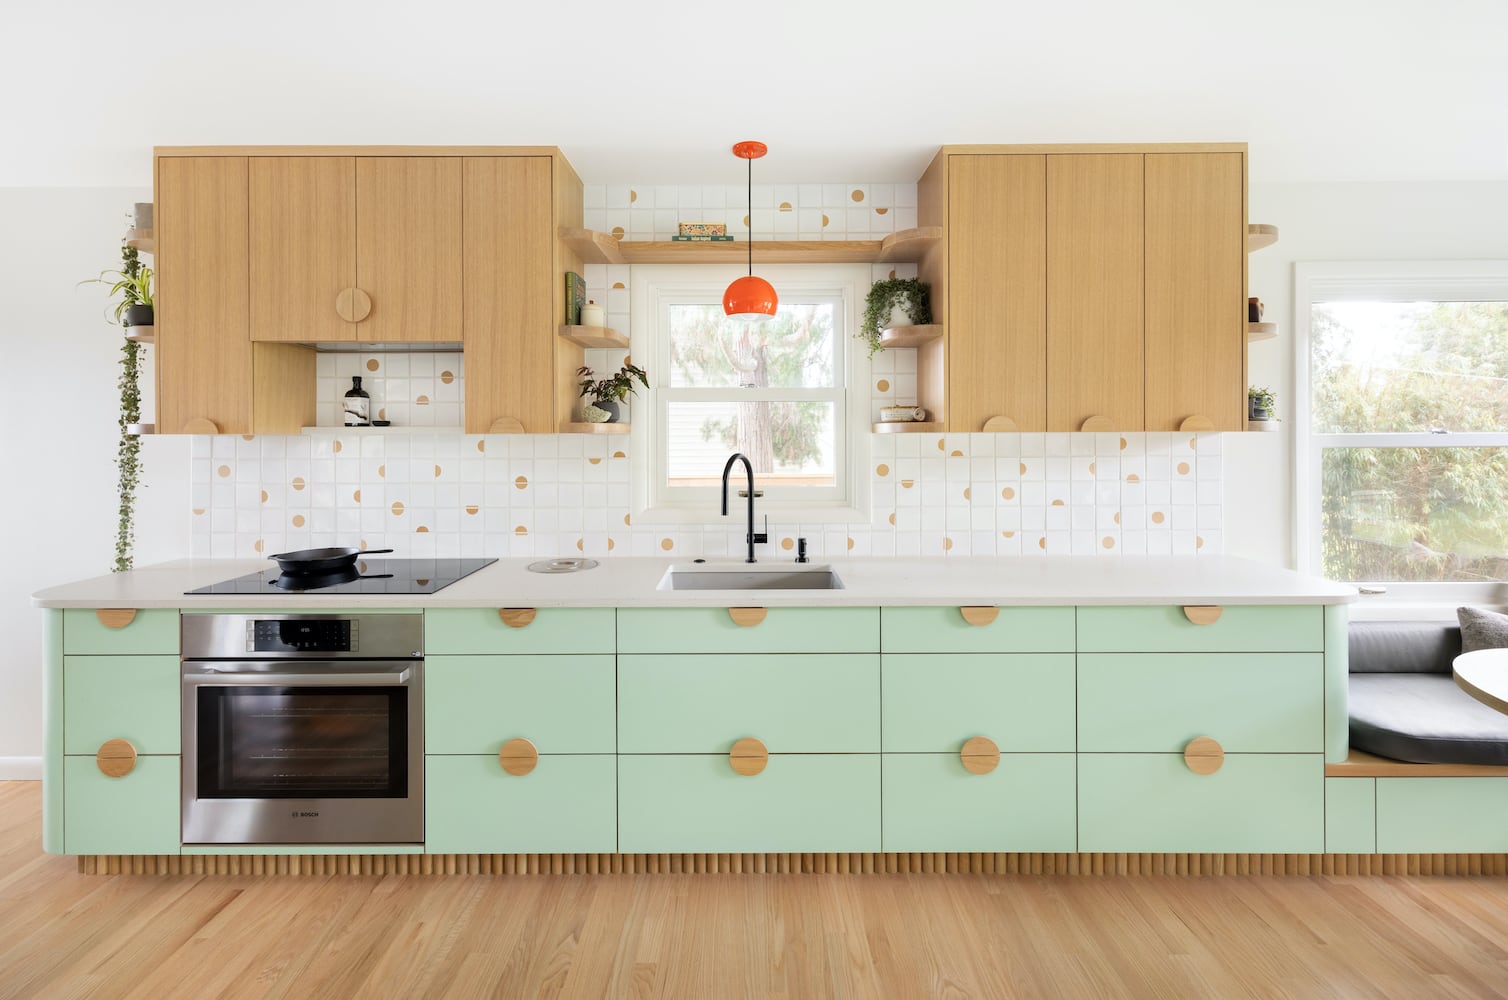 Portland astro mod kitchen remodel designed with lime green, white oak, tile materials